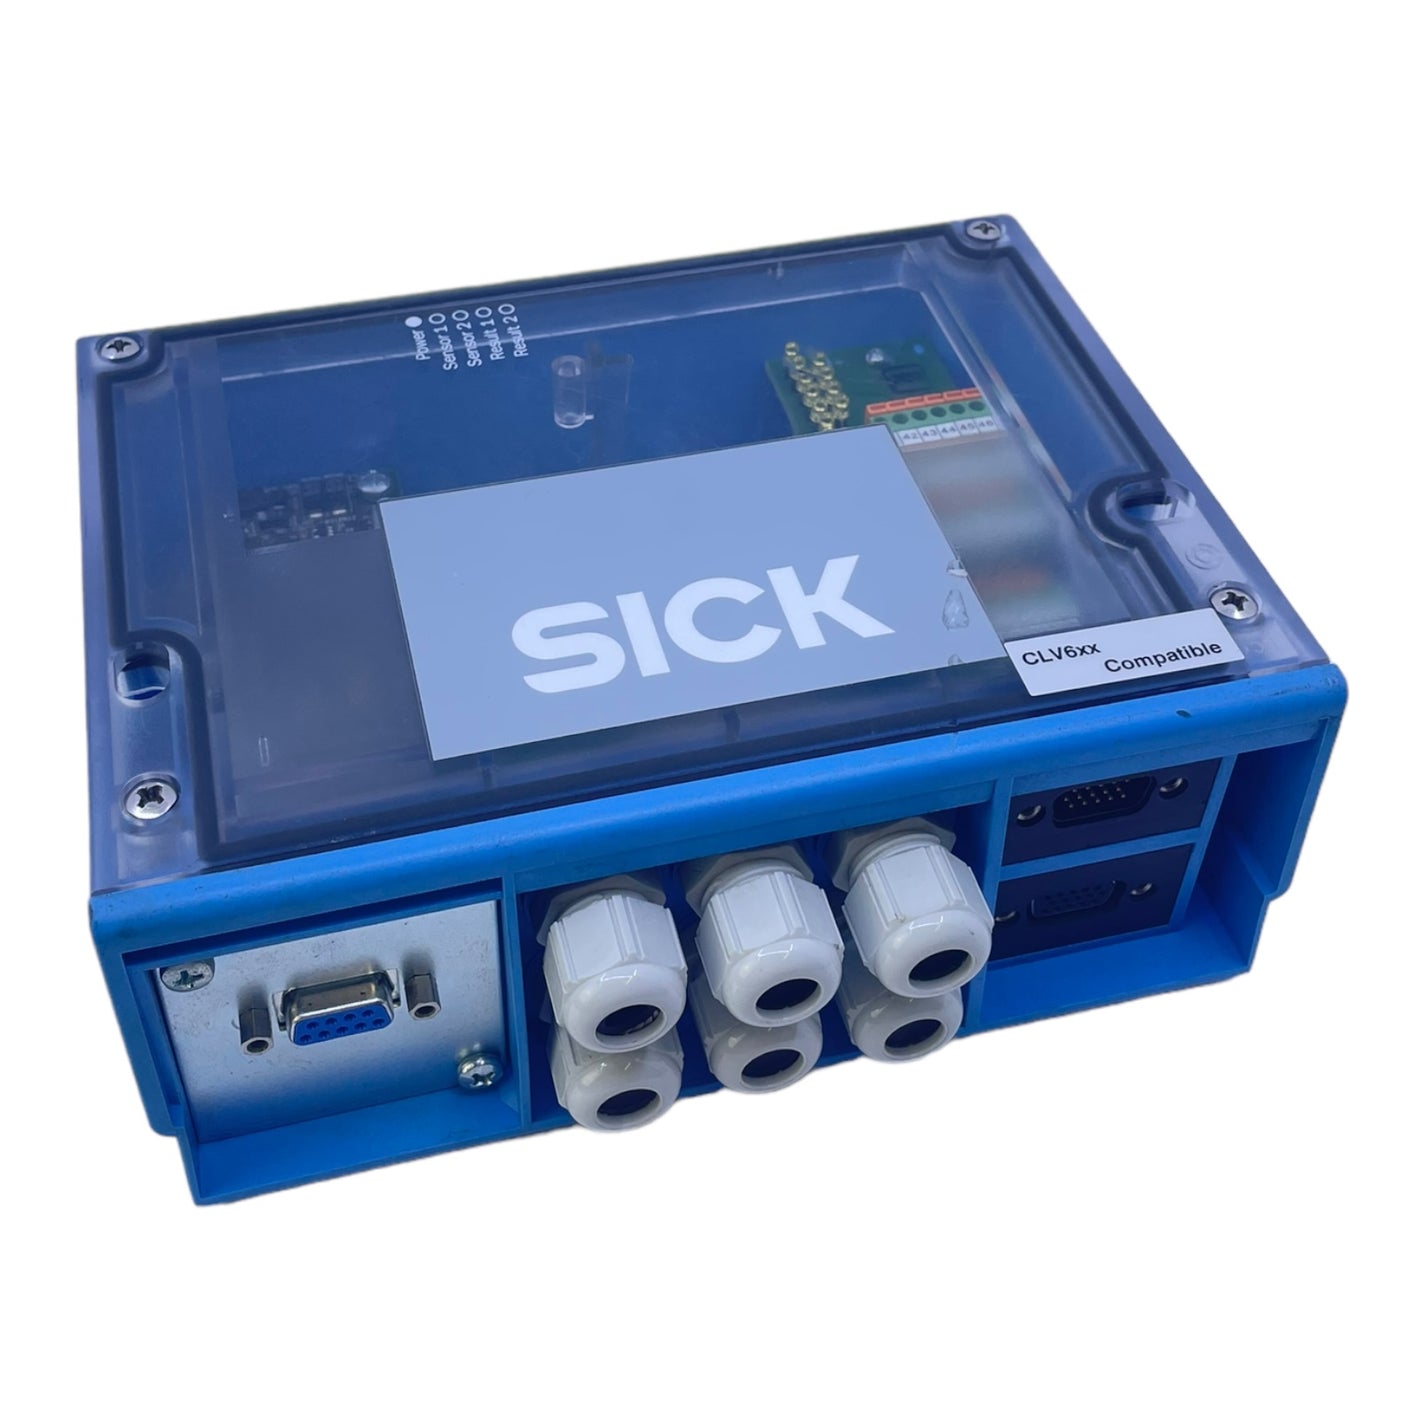 Sick CDM490-0001 Scanner connection module for industrial use Sick CDM490 